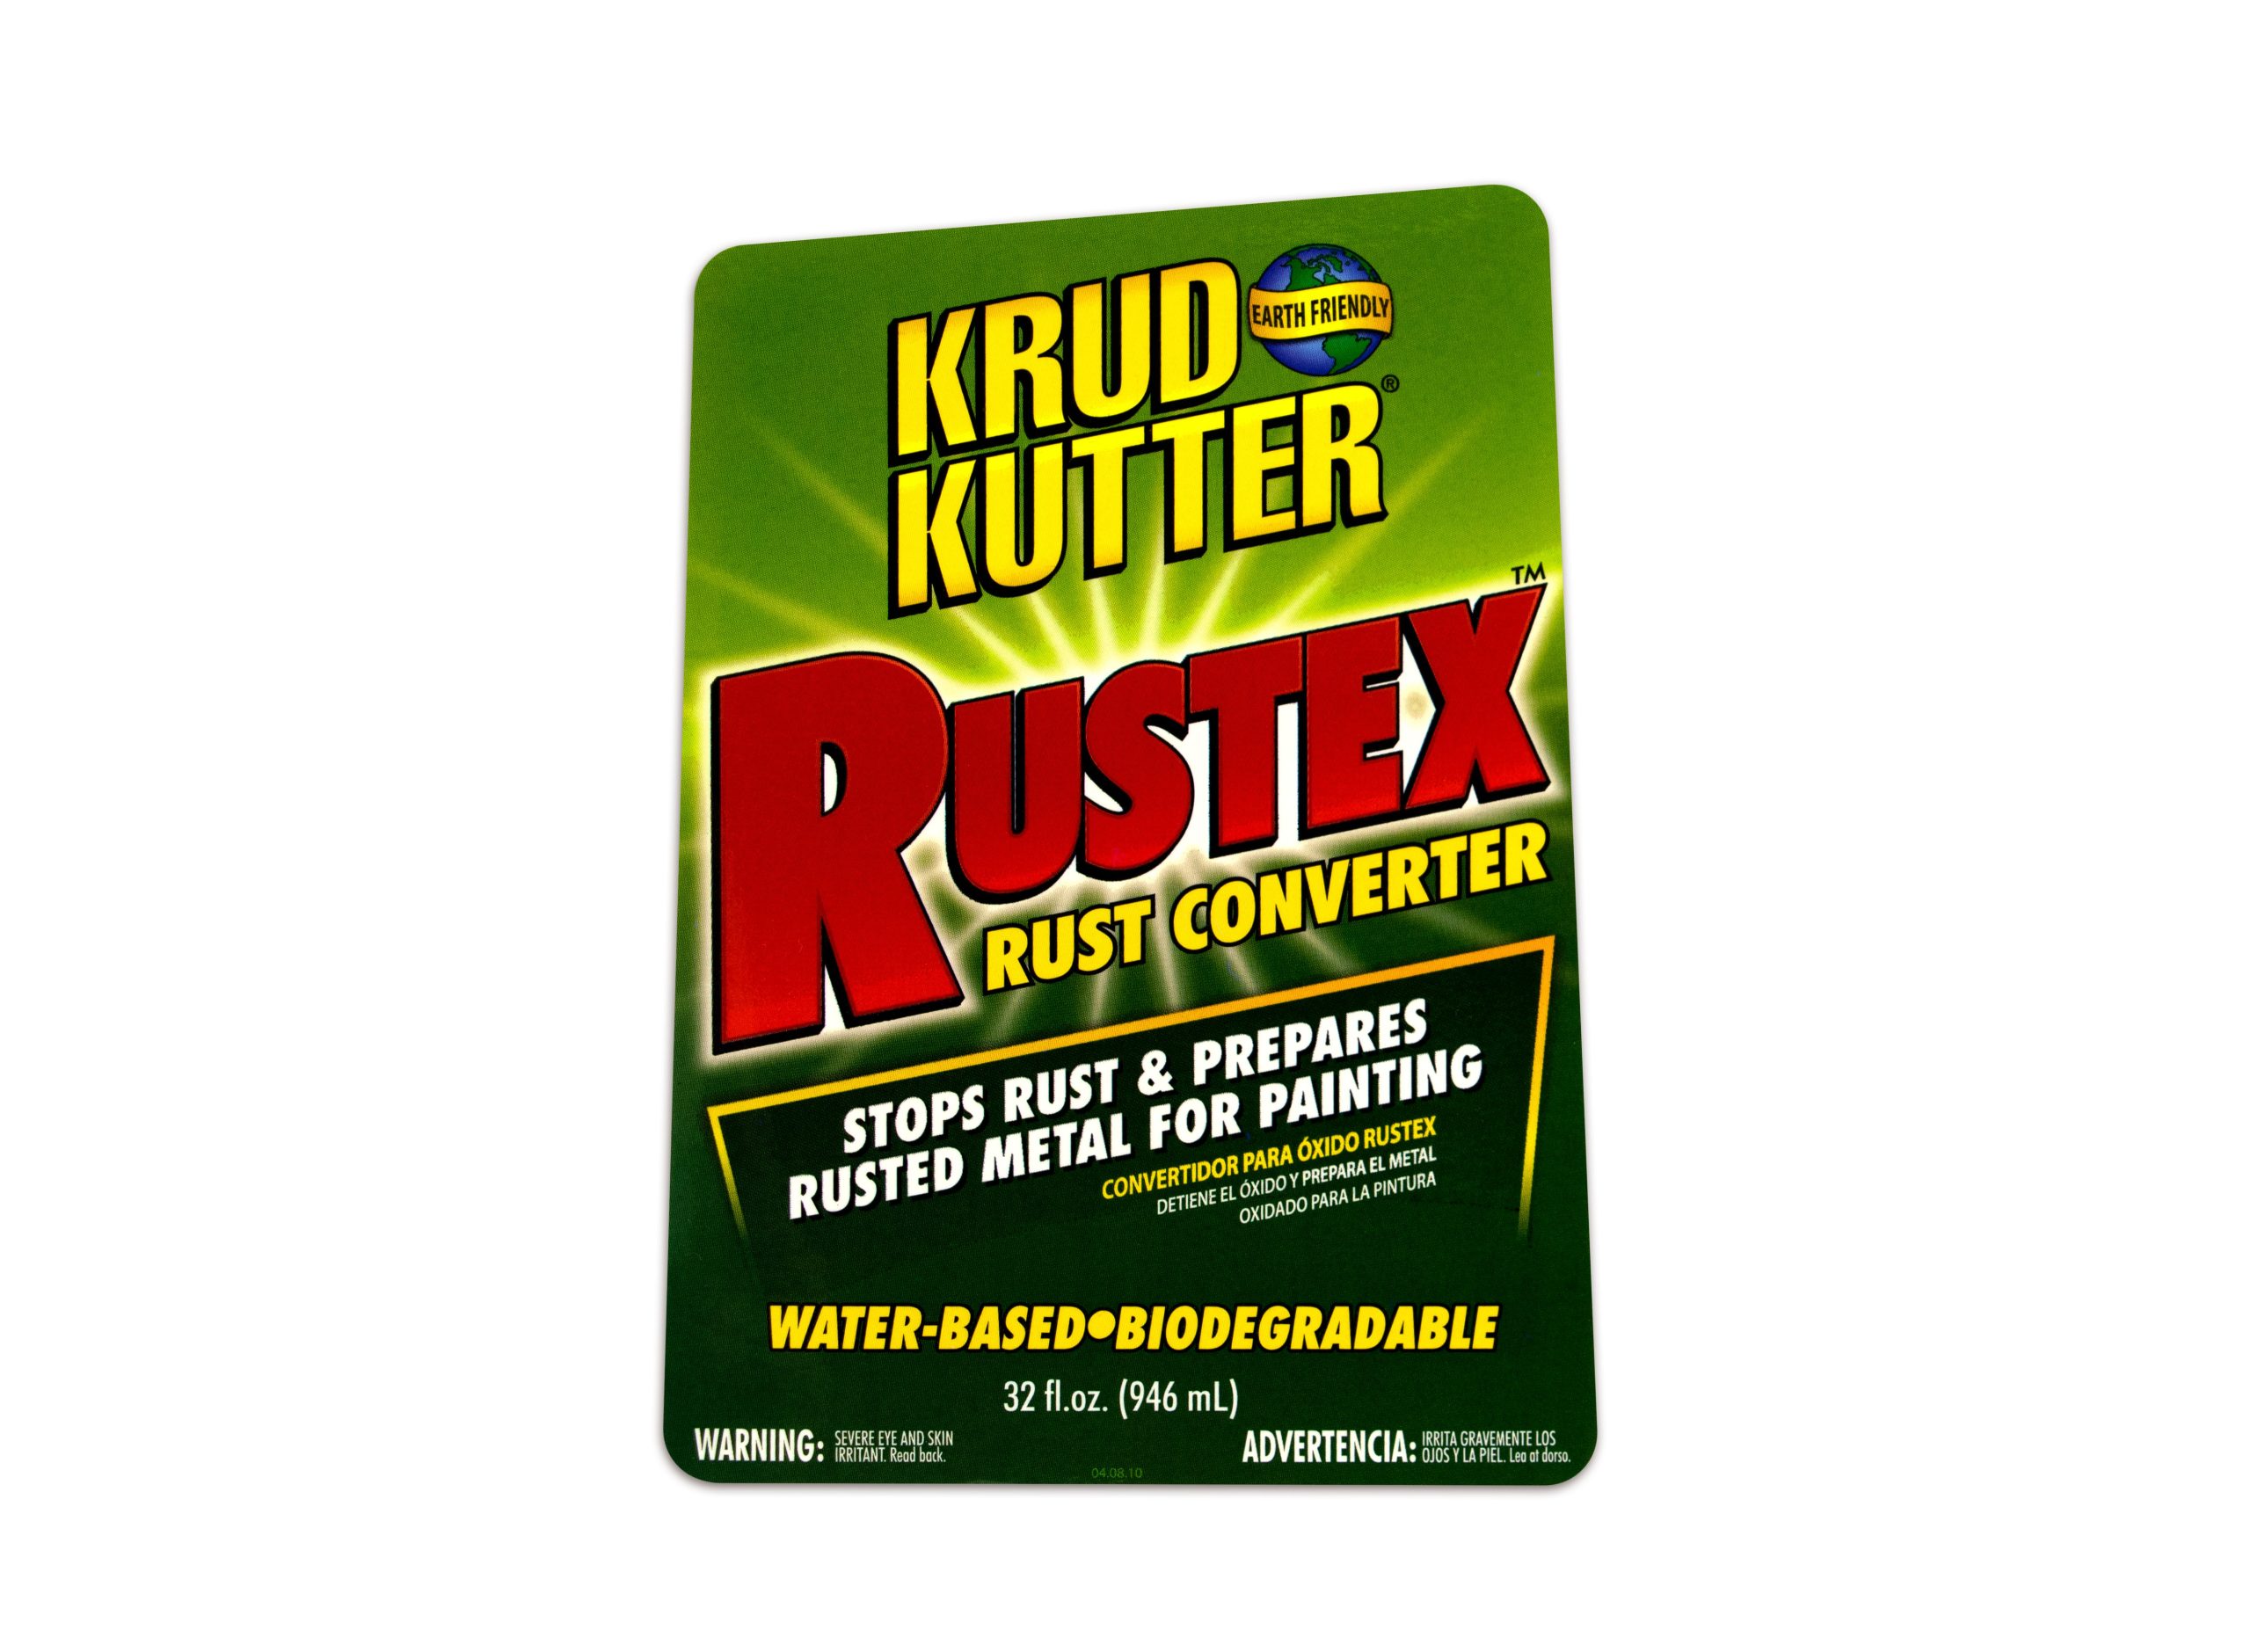 Krud Kutter Product Label